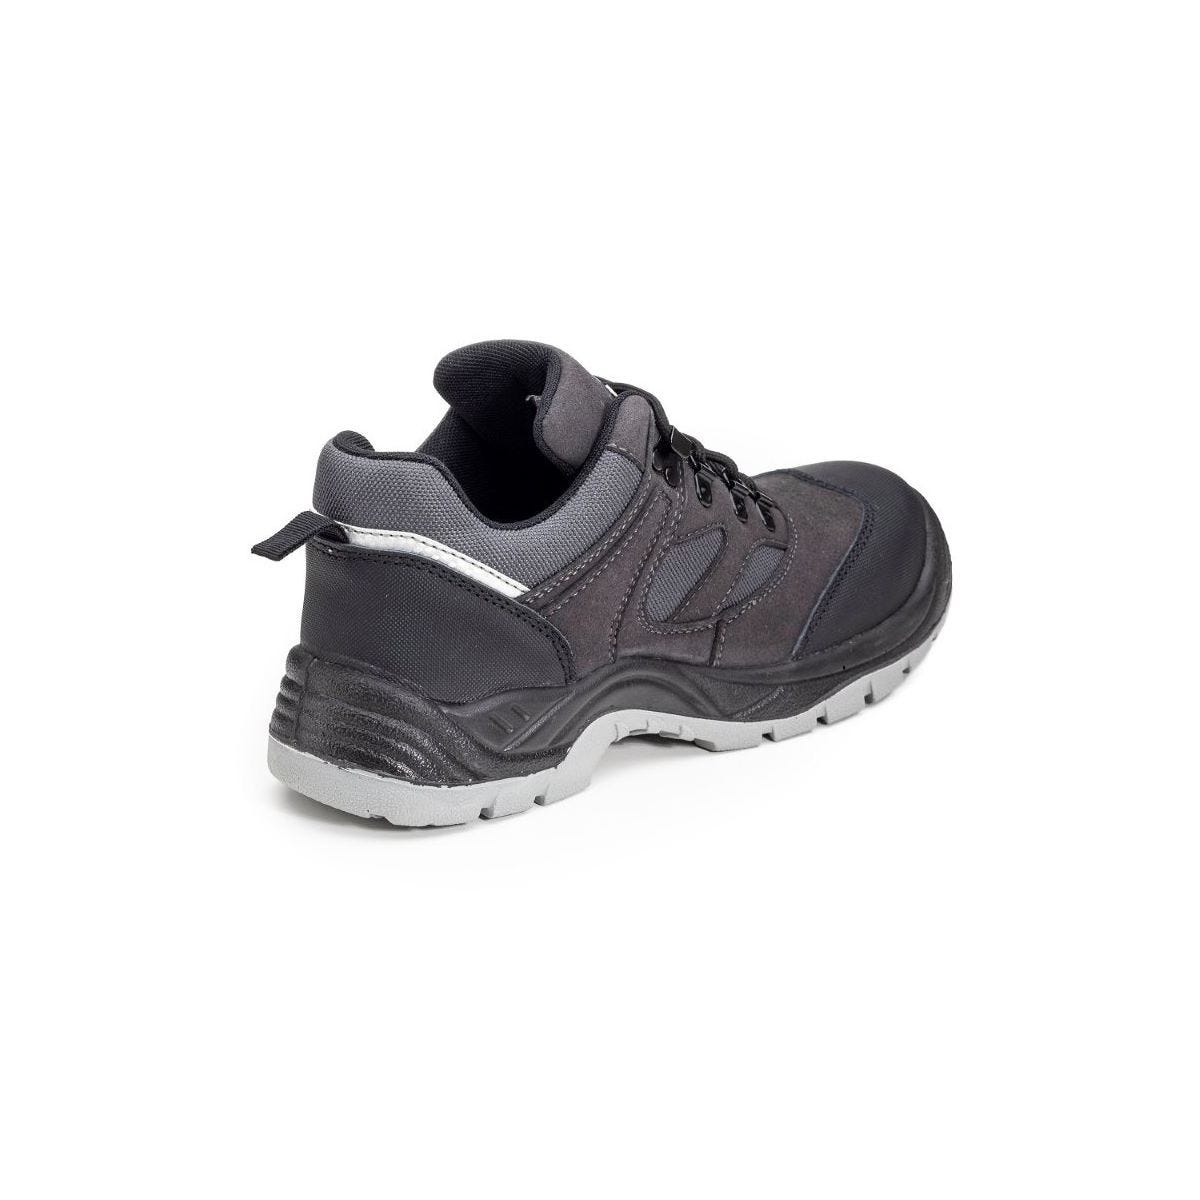 Chaussures sécurité SILVER Basse Anthracite - Coverguard - Taille 46 2